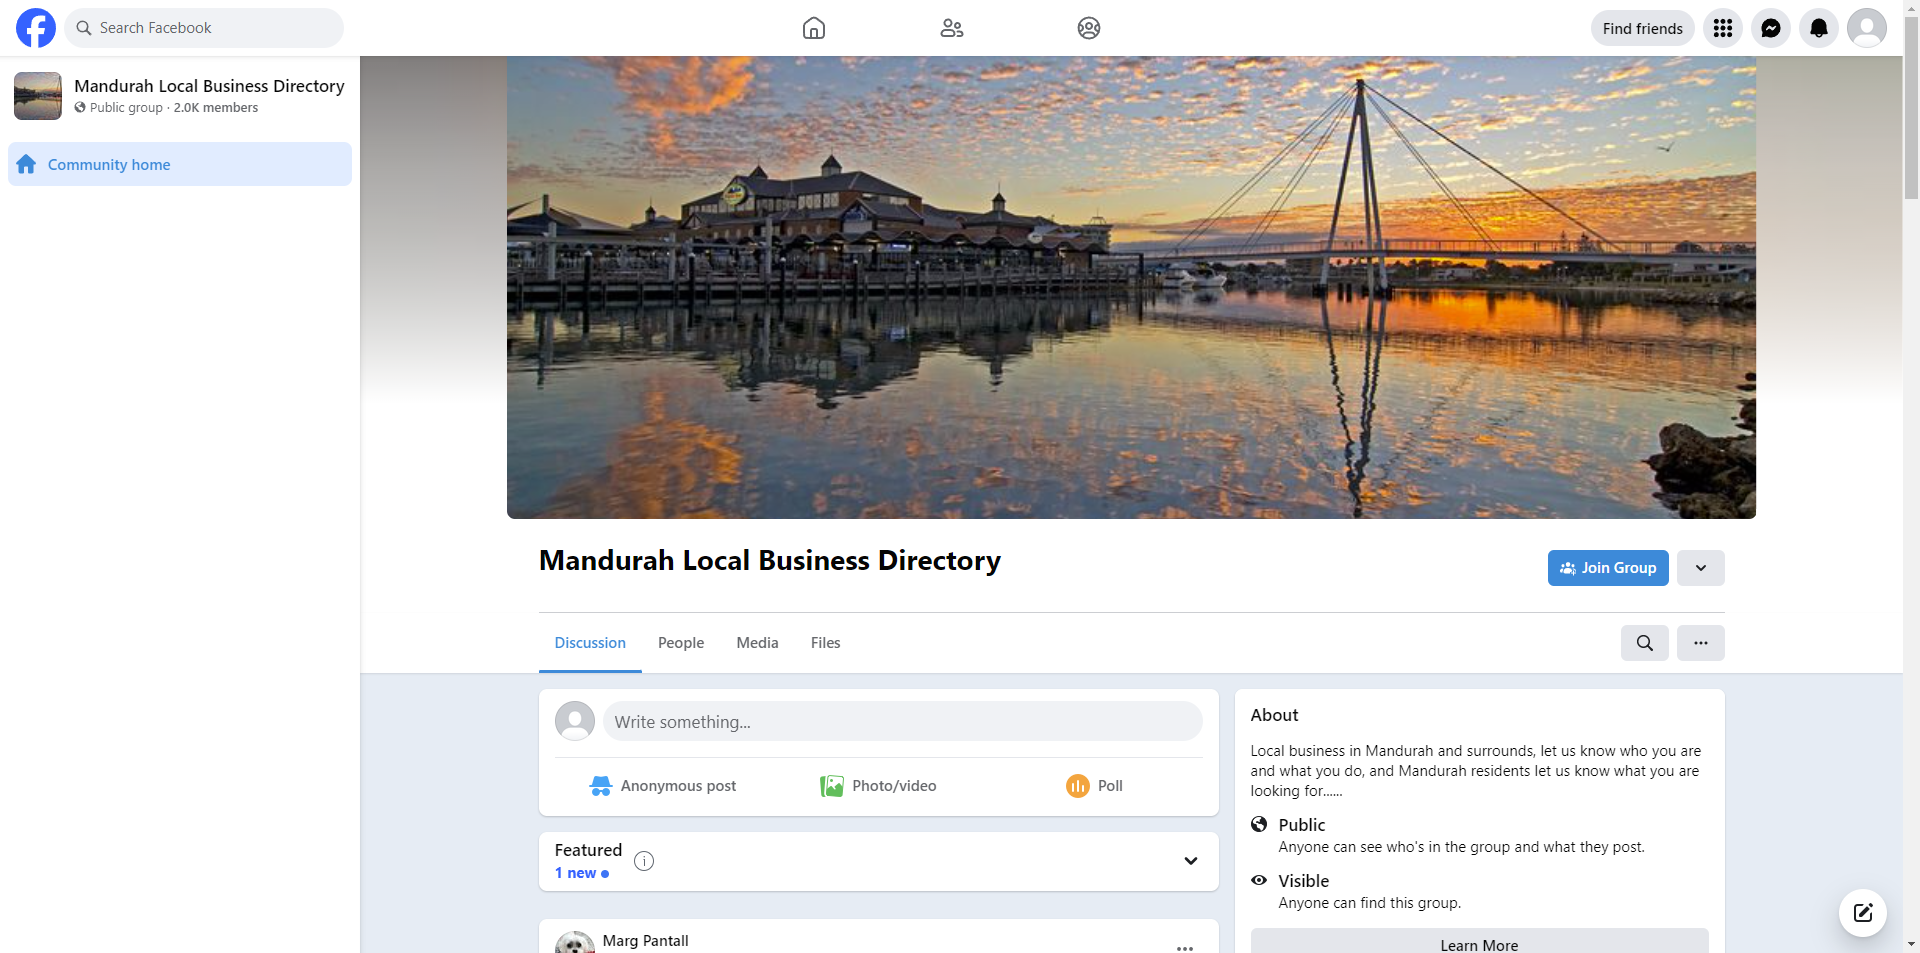 Mandurah Local Business Directory